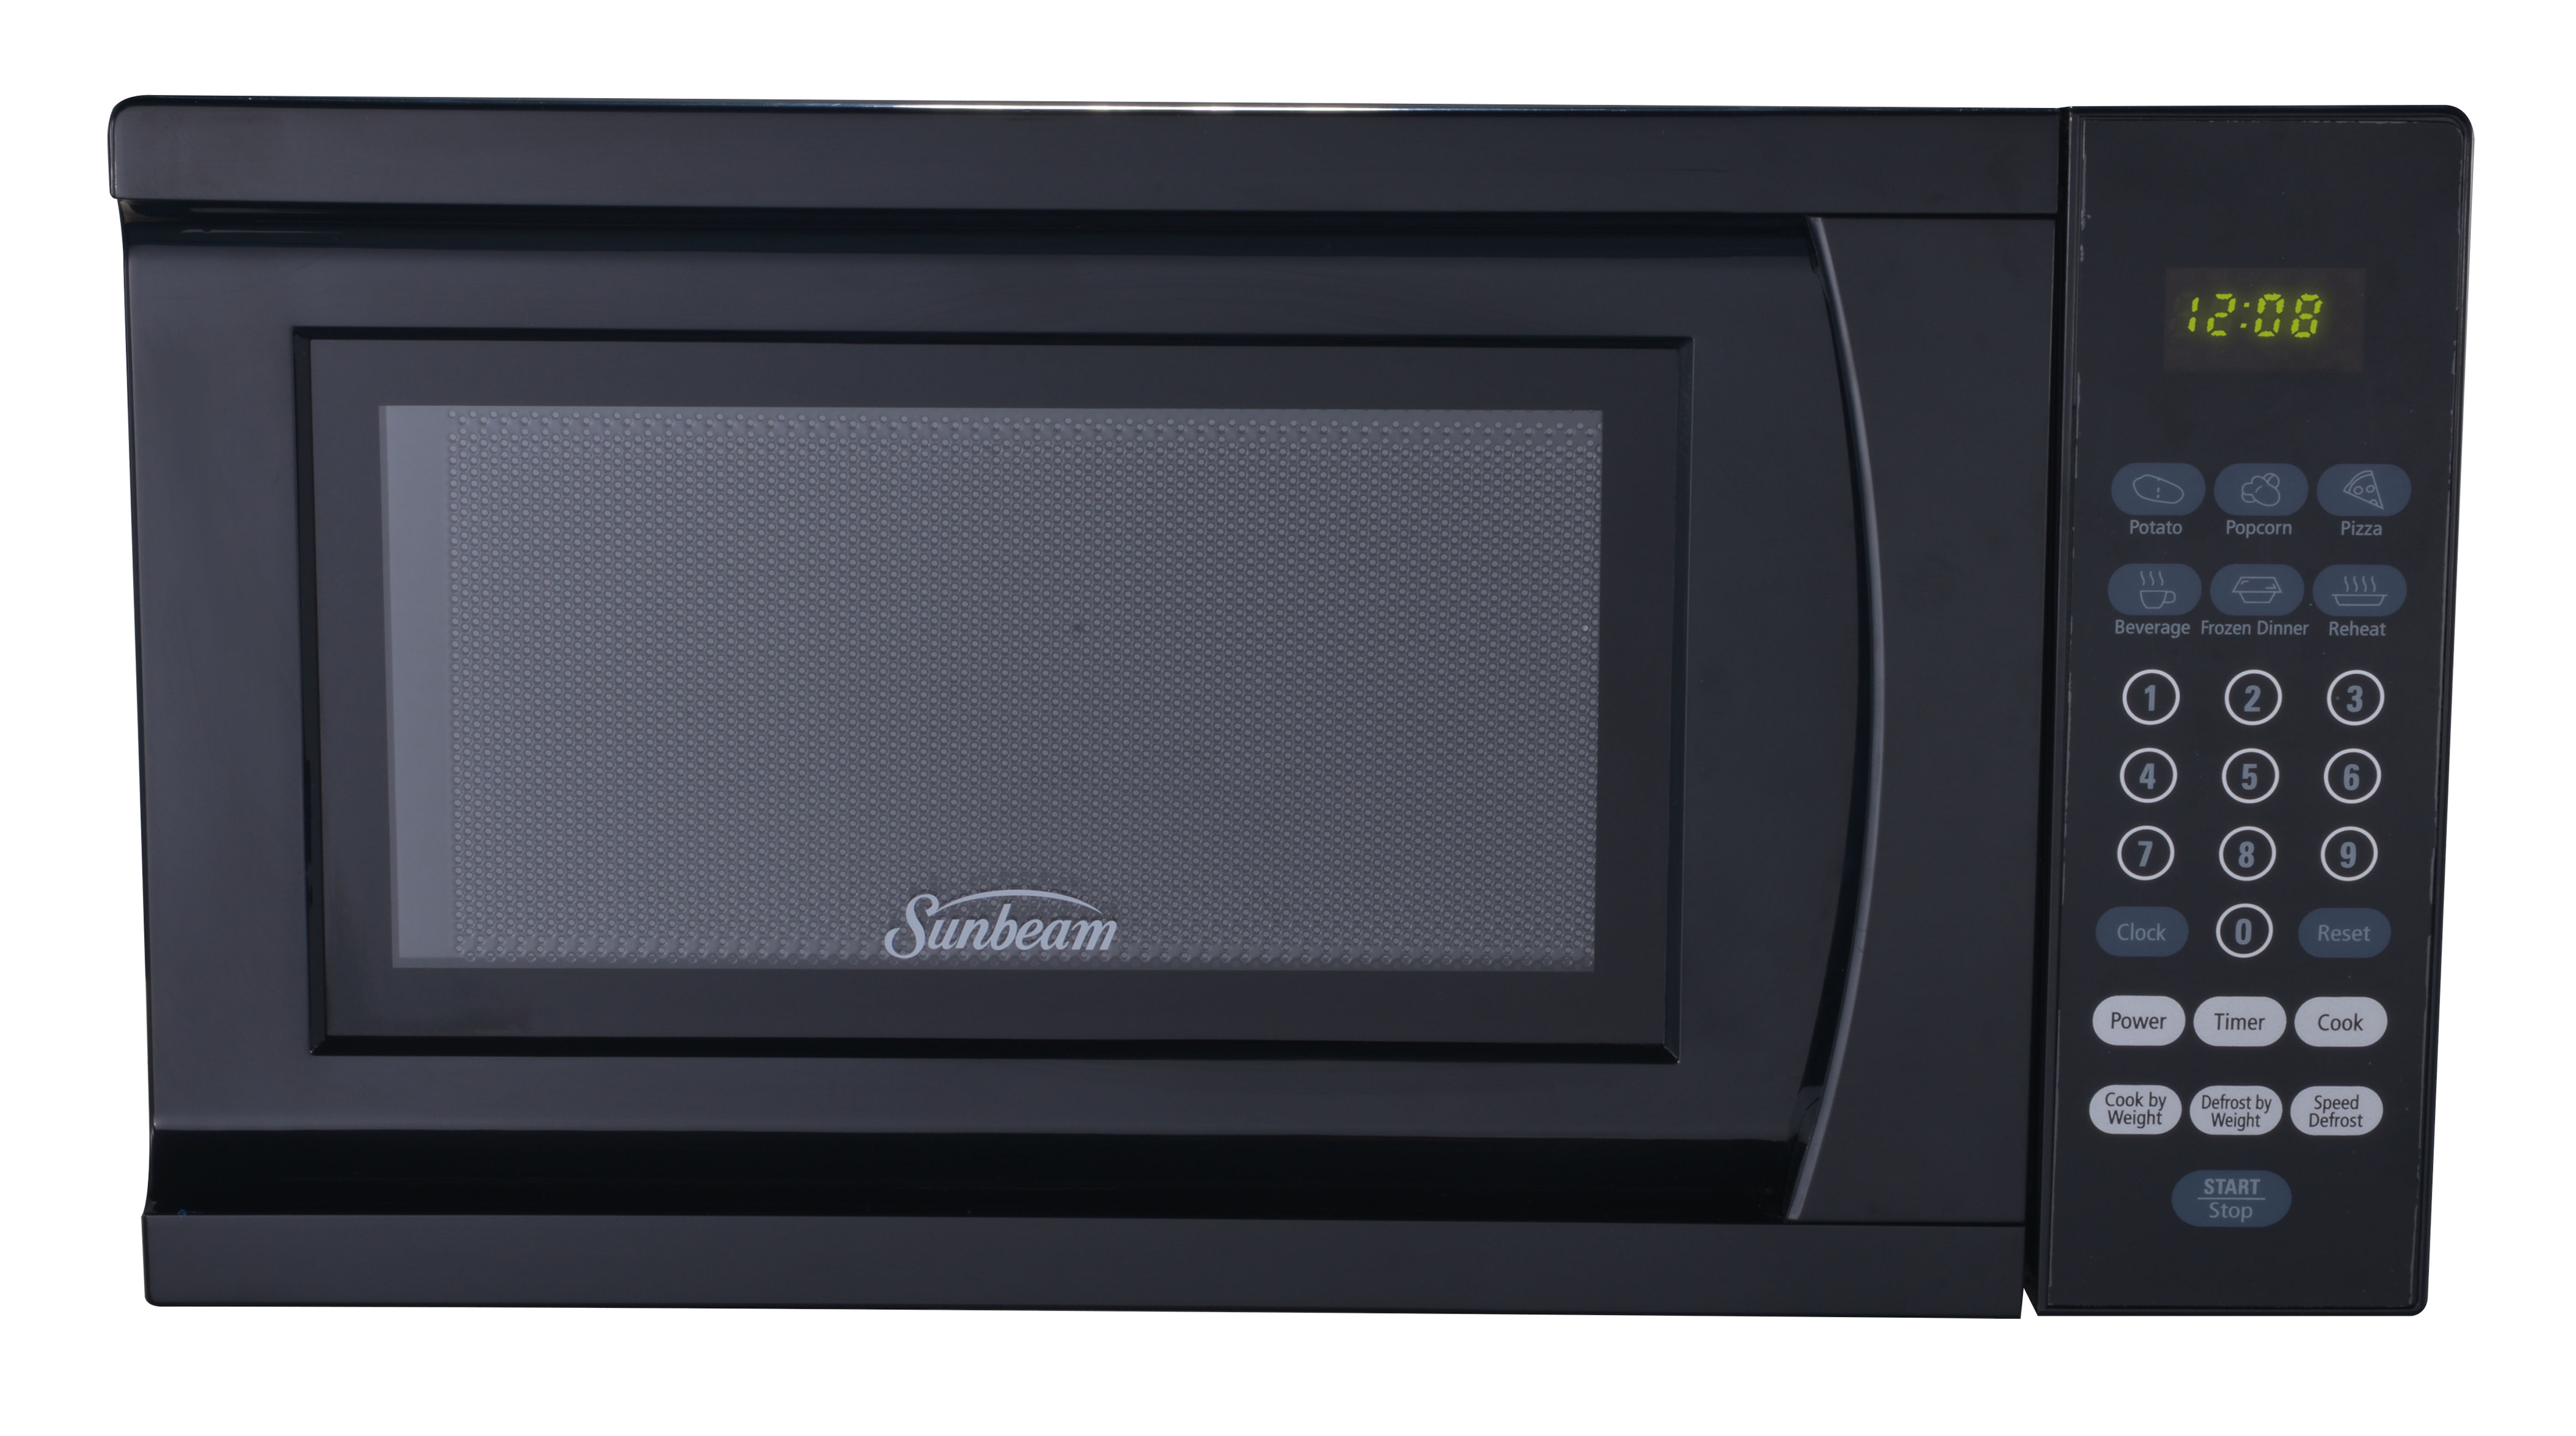 Sunbeam 0.7-cu ft 700-Watt Countertop Microwave (Black) at